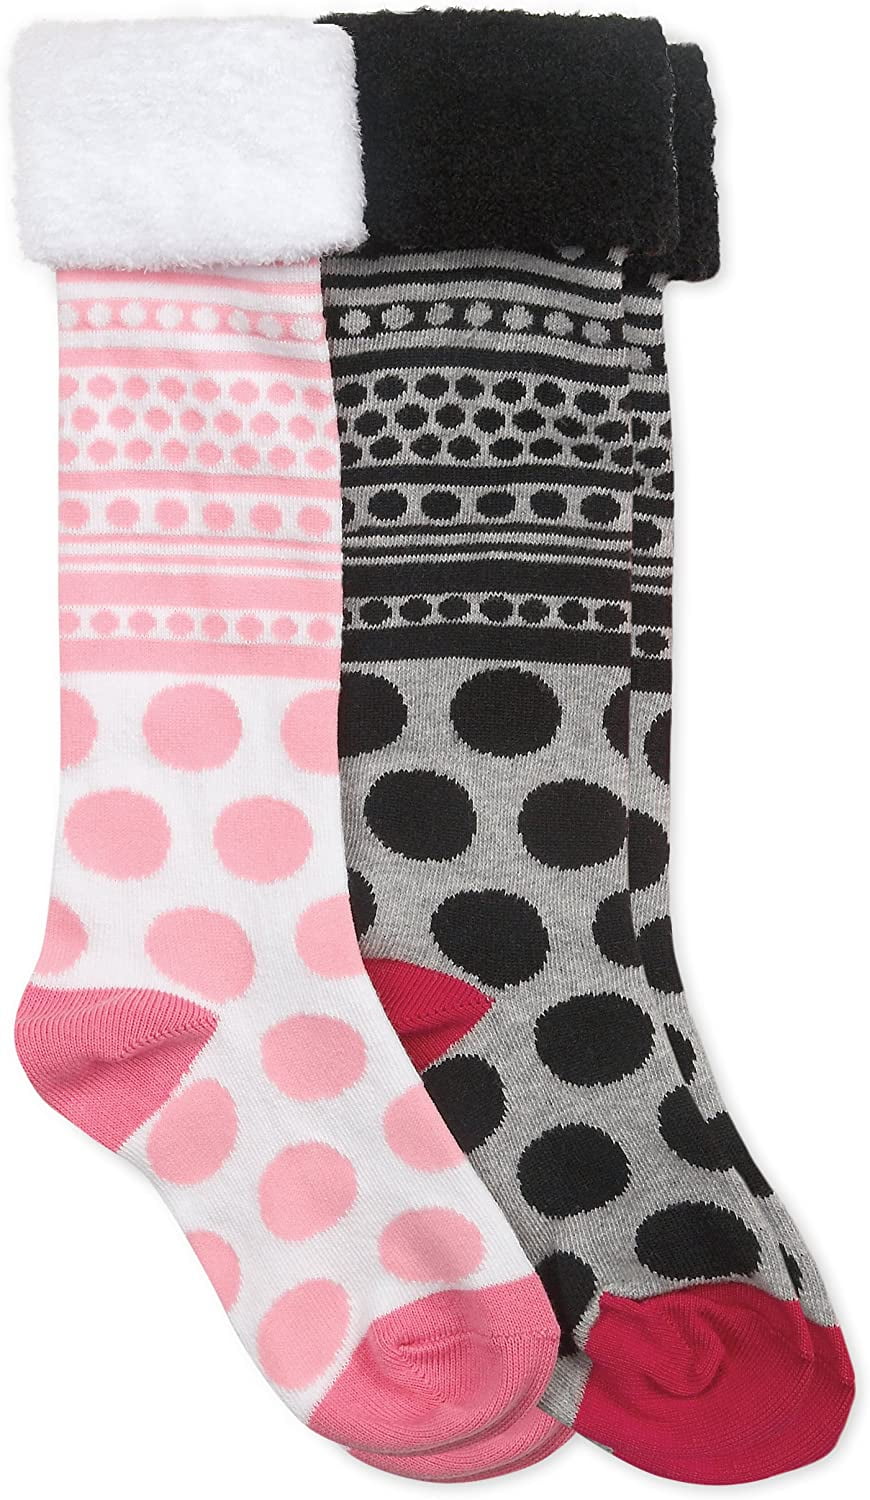 Jefferies Socks Girls Socks, 2 Pack Fuzzy Cuff Knee High Polka Dot Cute ...